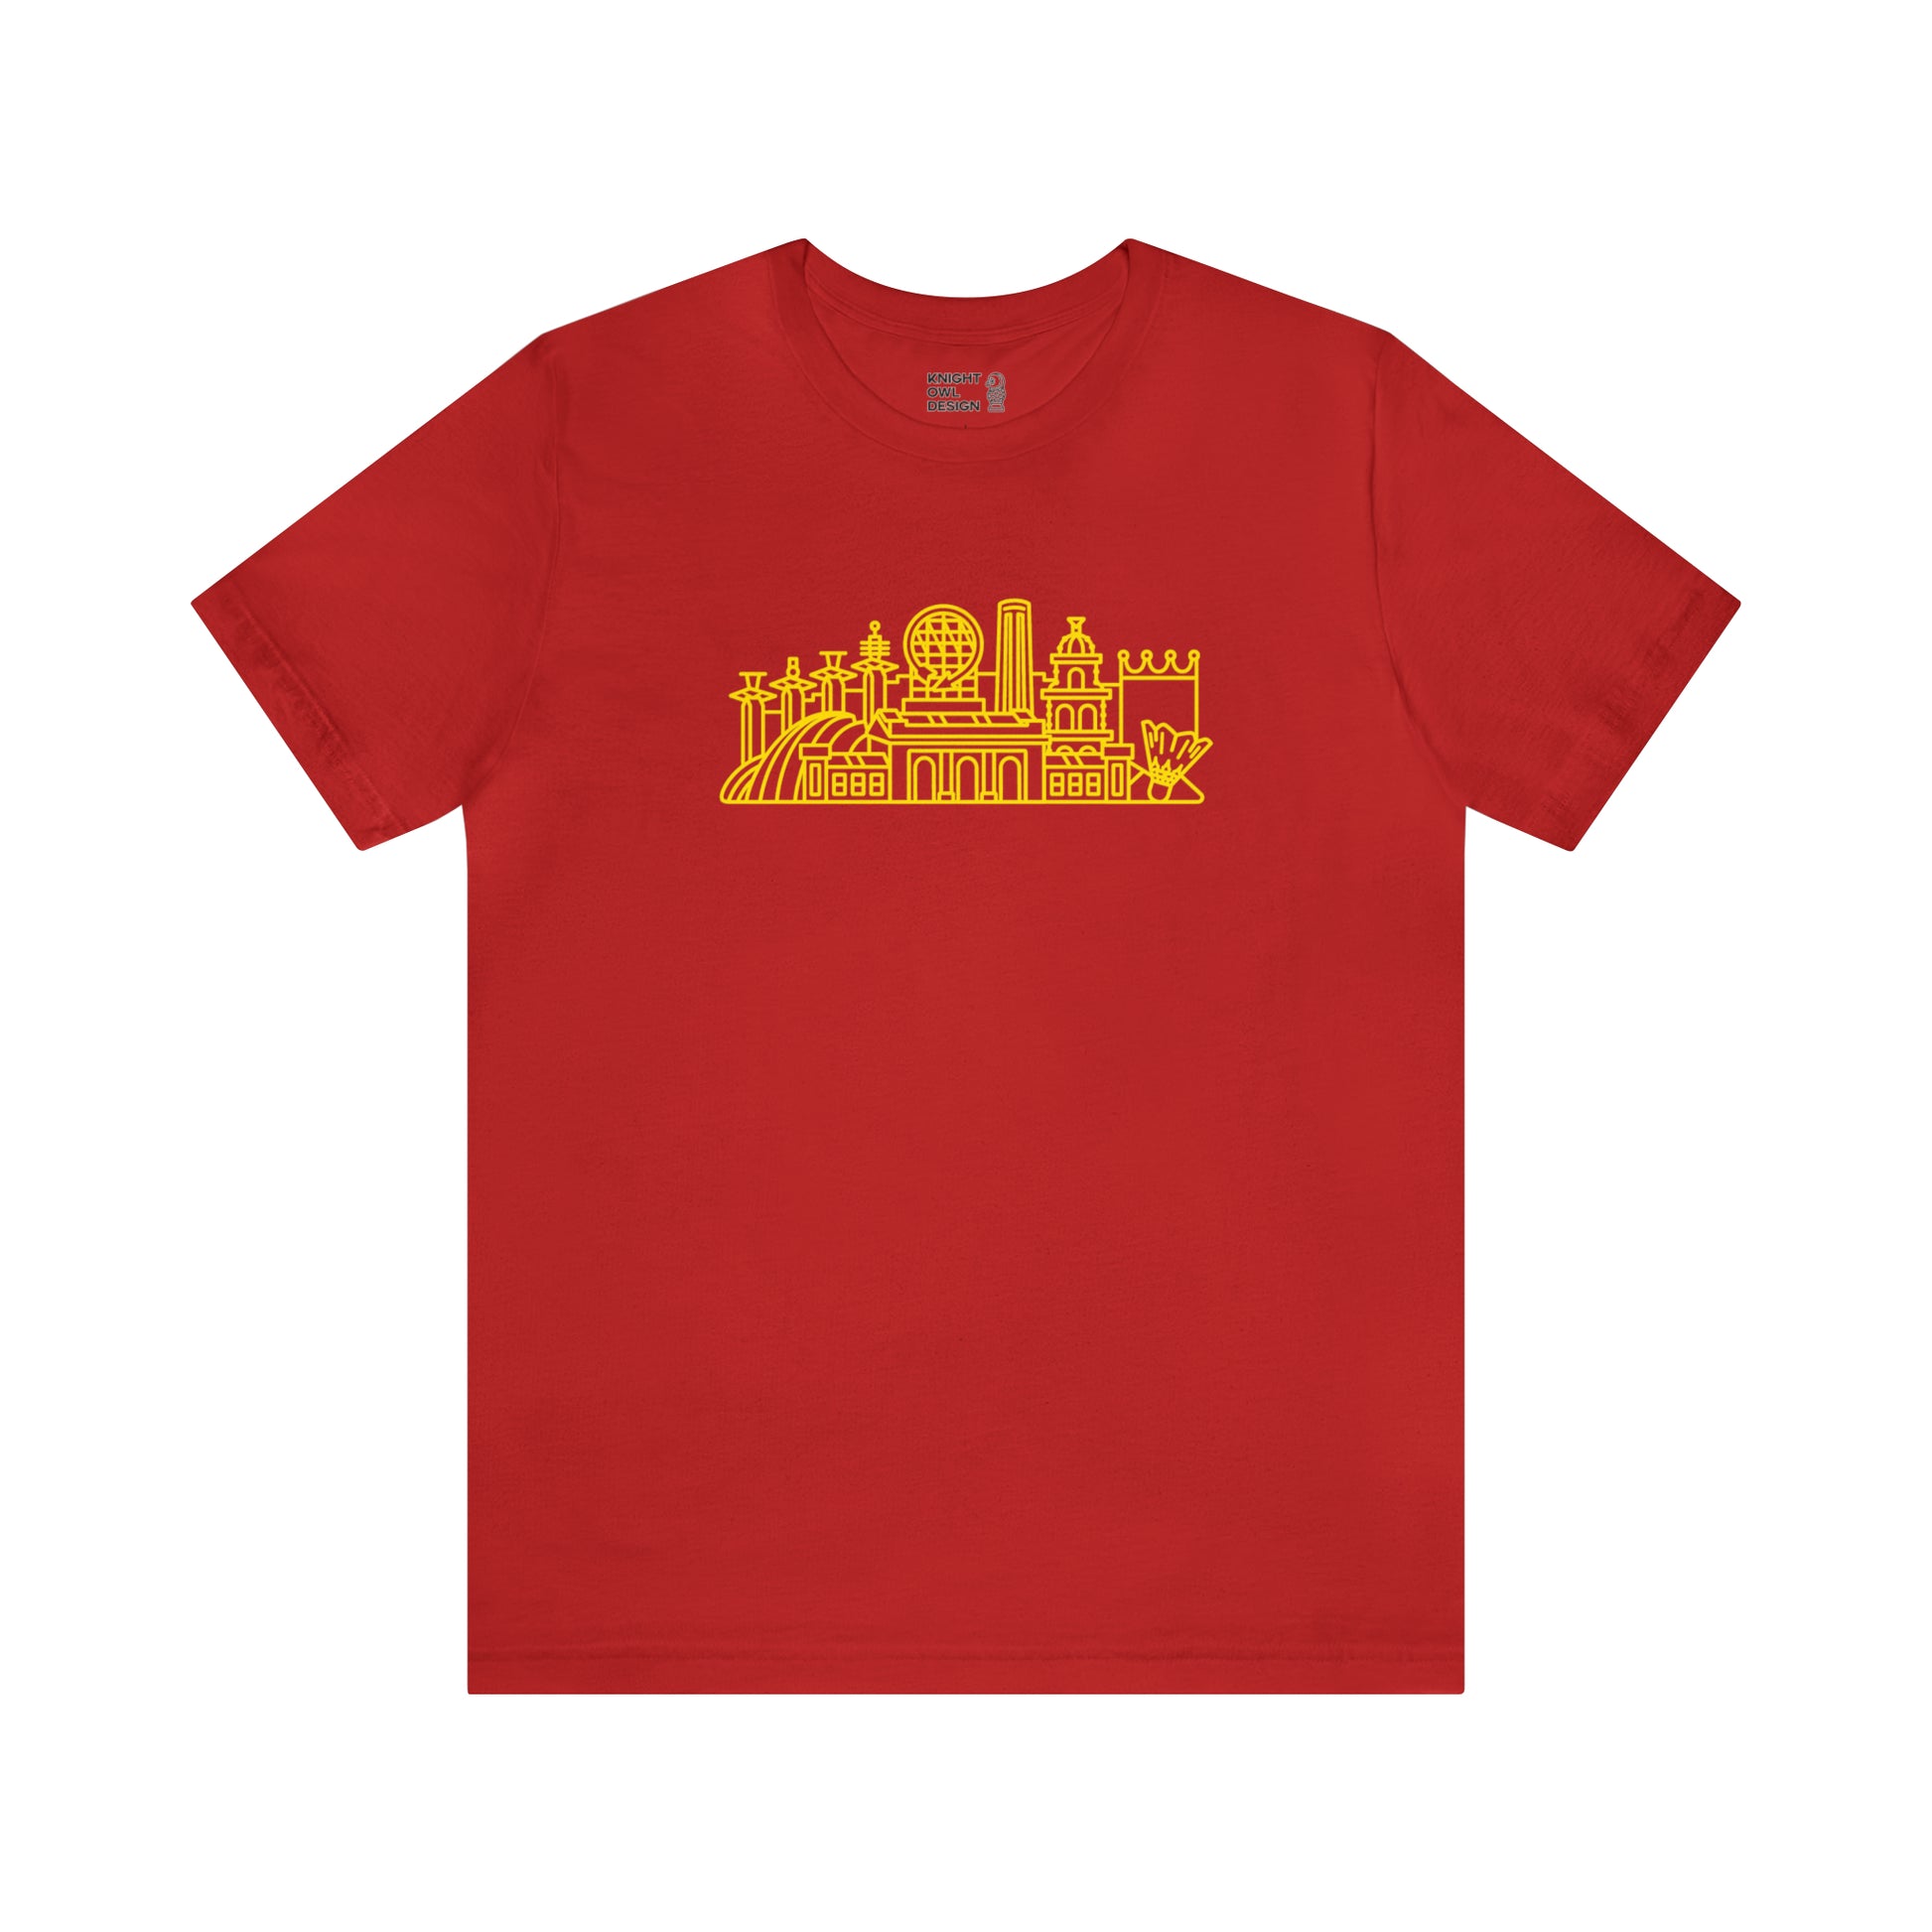 Kids T-Shirt by Design Turnpike ...